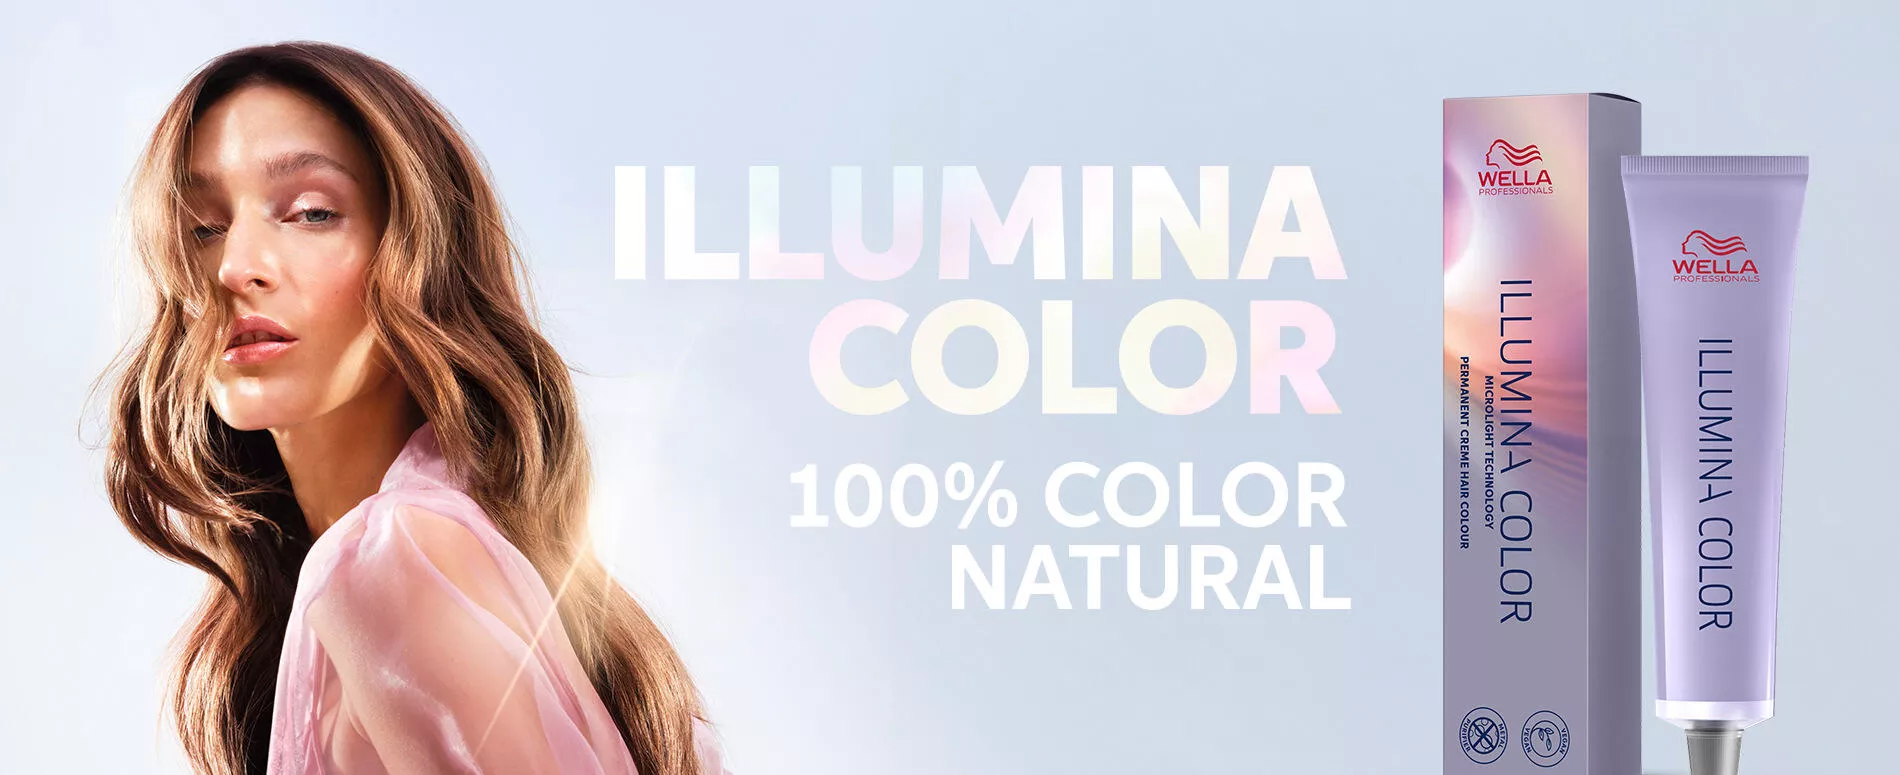 Una modelo de cabello castaño claro ondulado junto a imágenes del producto capilar 100% natural Illumina Color de Wella Professionals